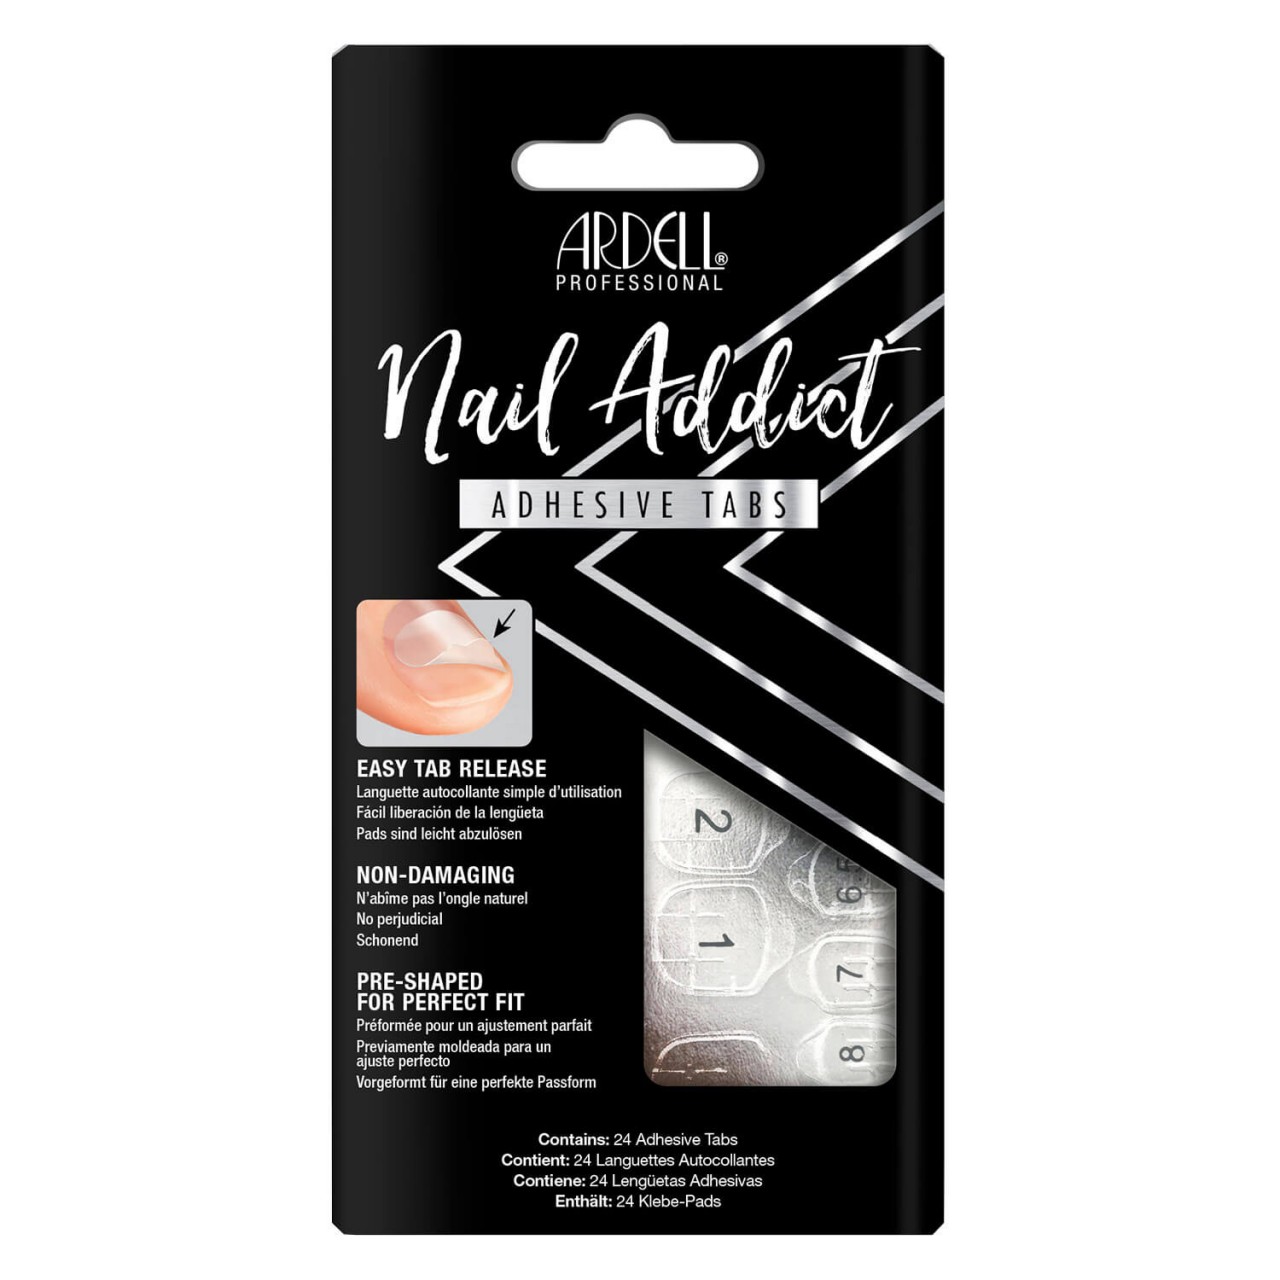 Nail Addict - Nail Addict Adhesive Tabs von Ardell